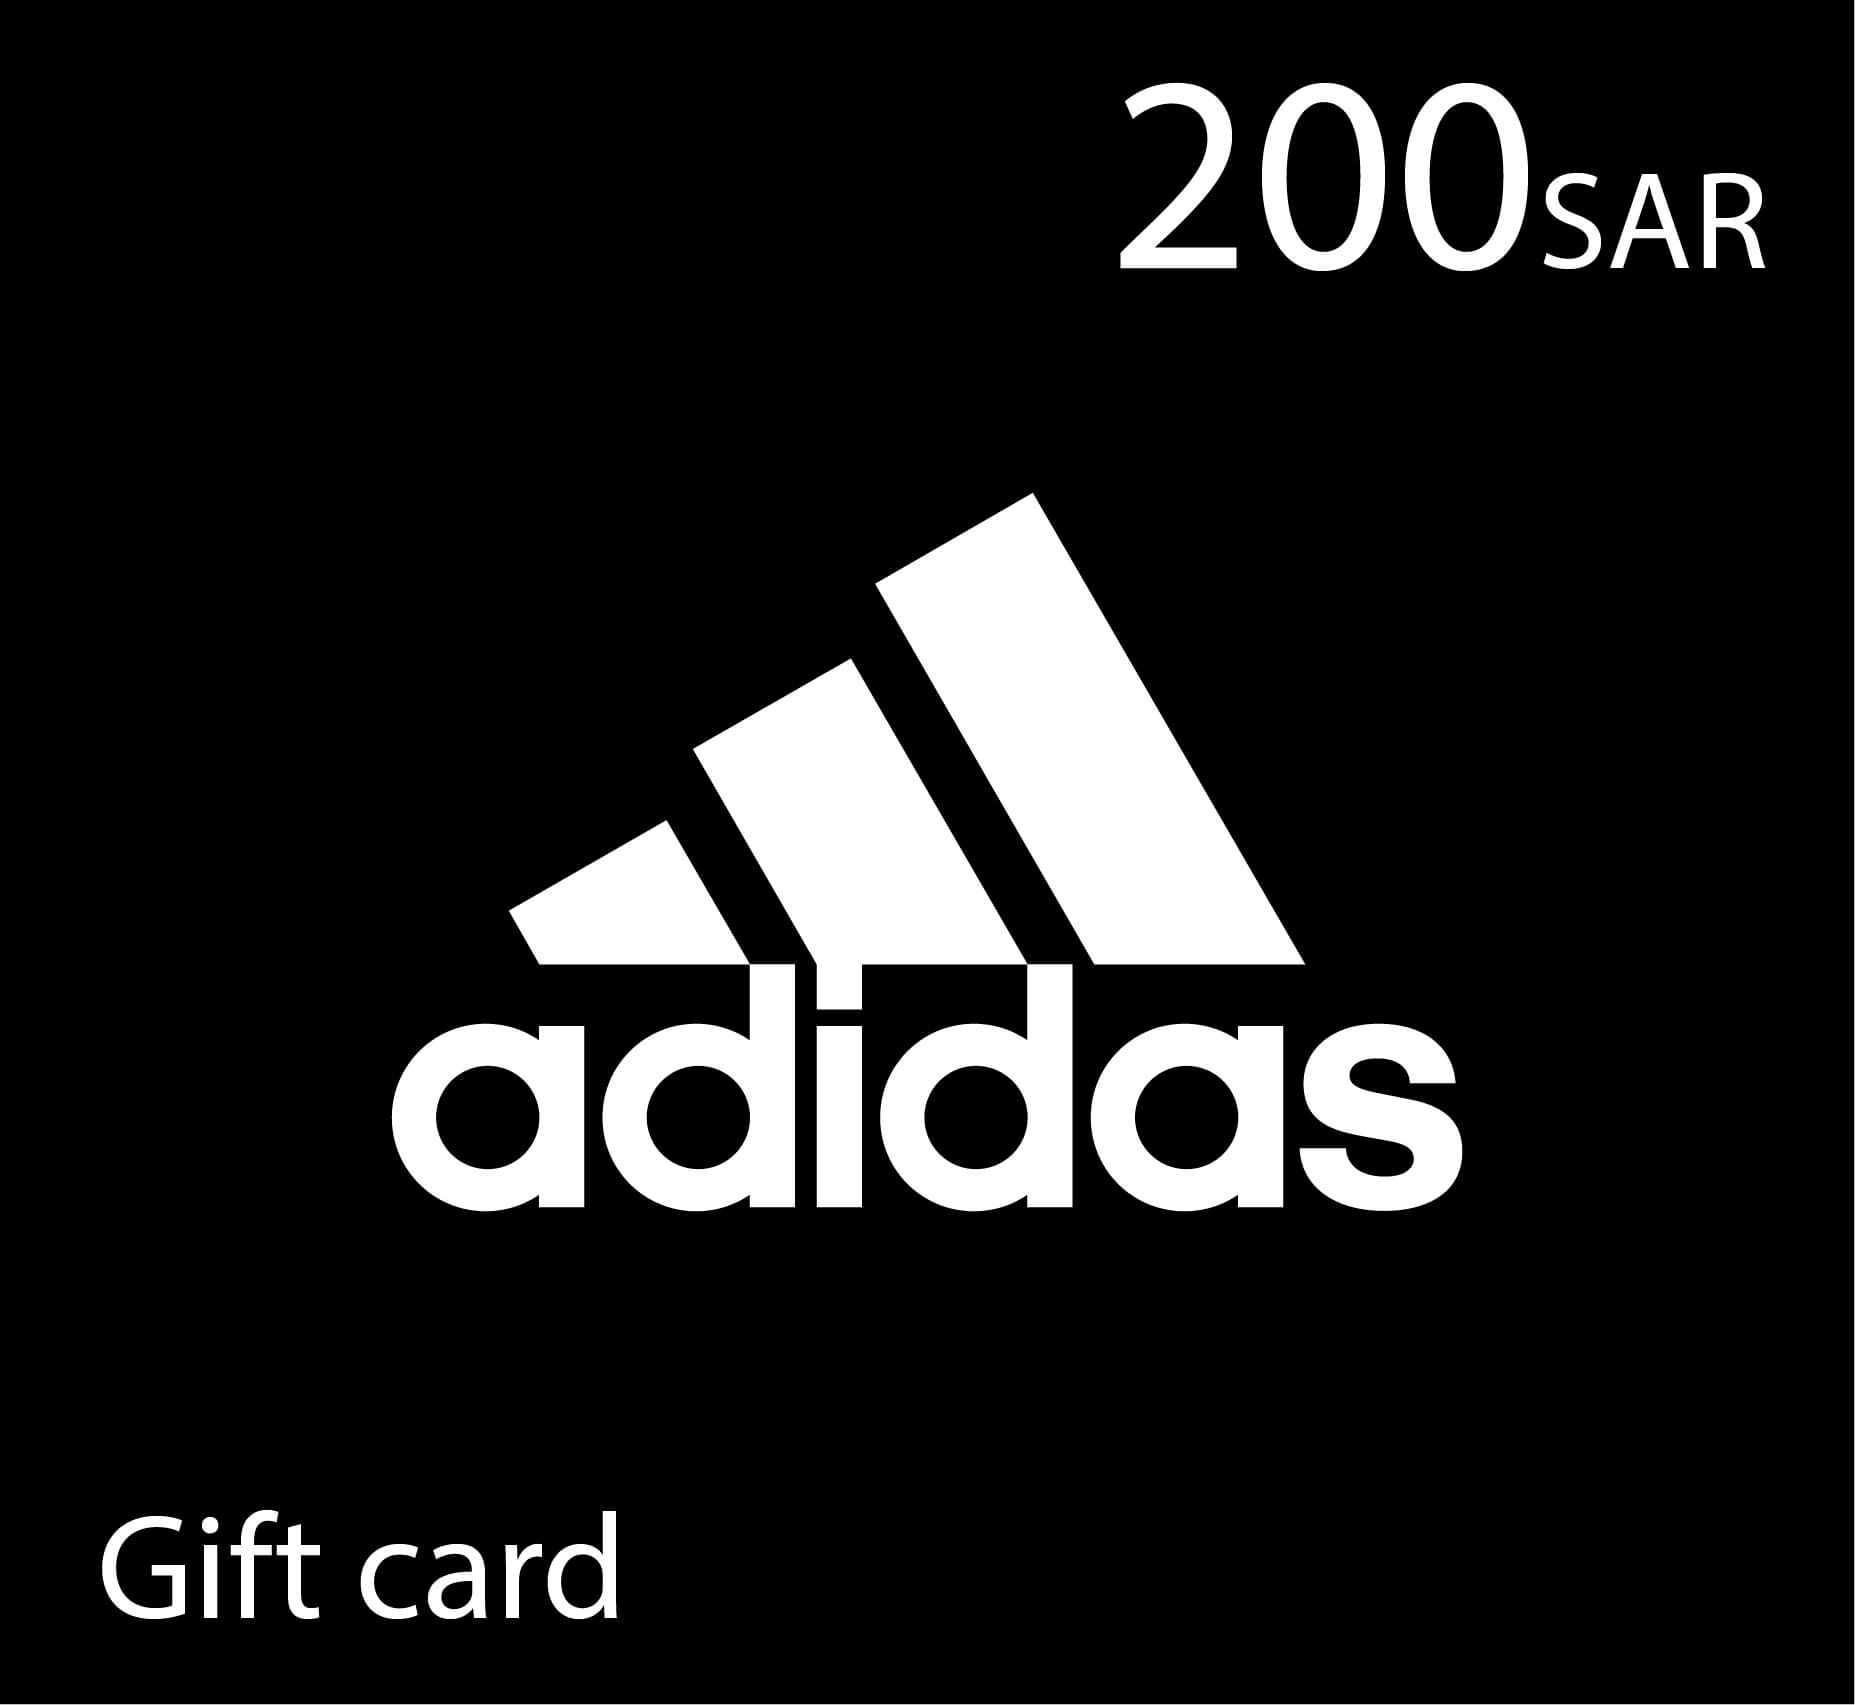 Adidas Gift Card - 200 SAR